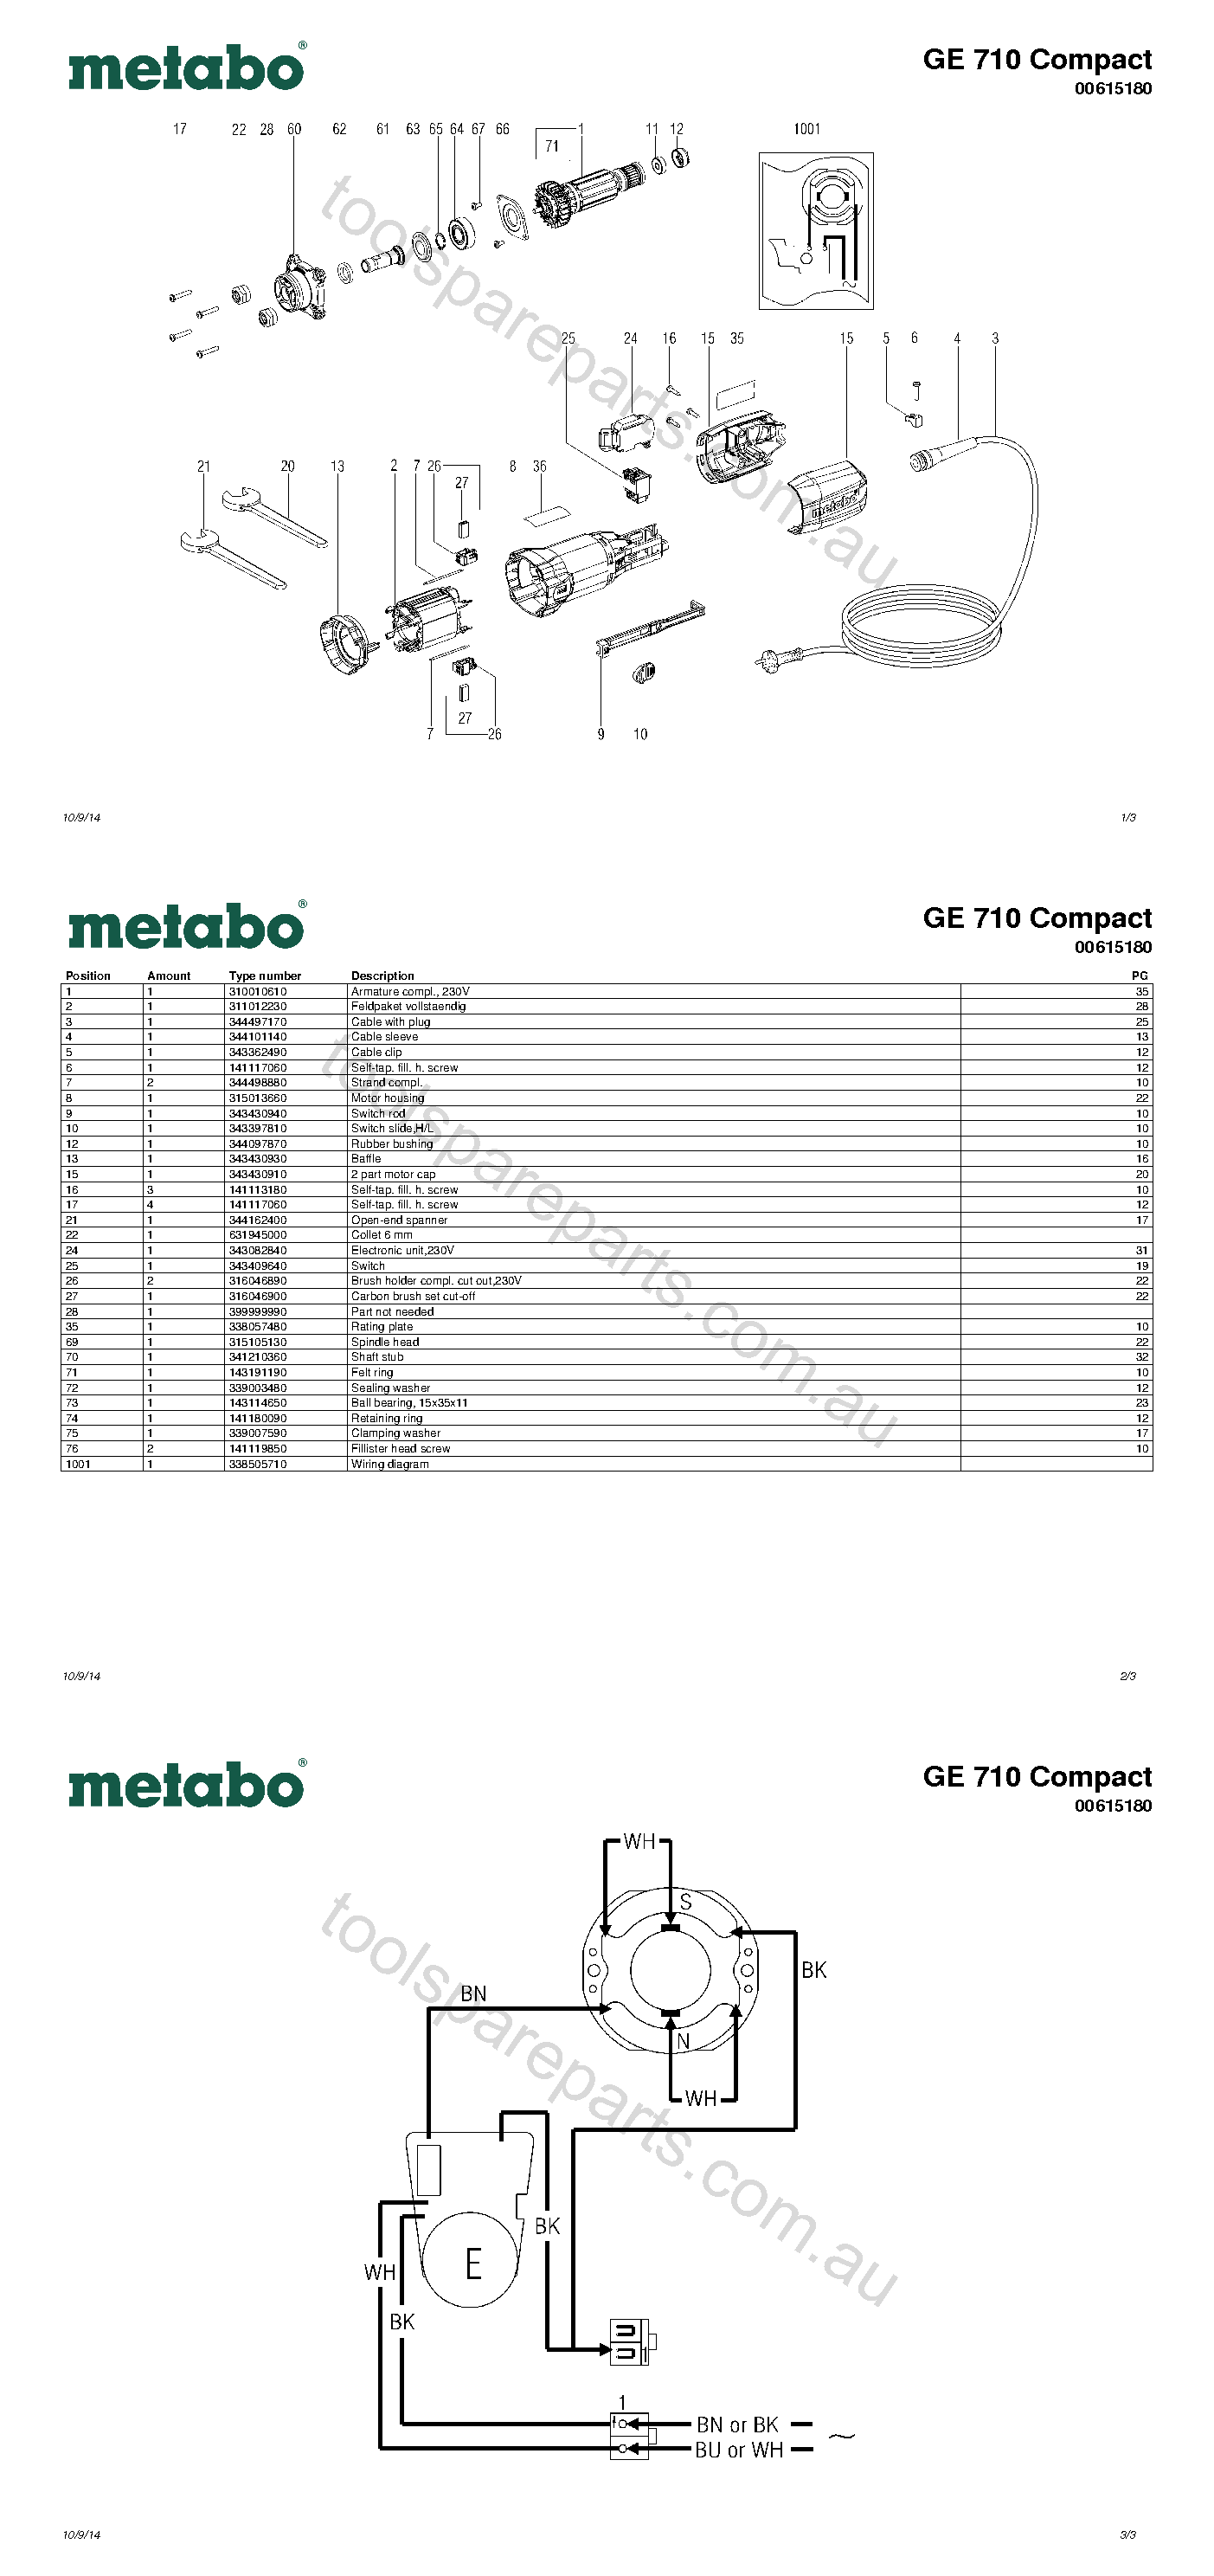 Metabo GE 710 Compact 00615180  Diagram 1